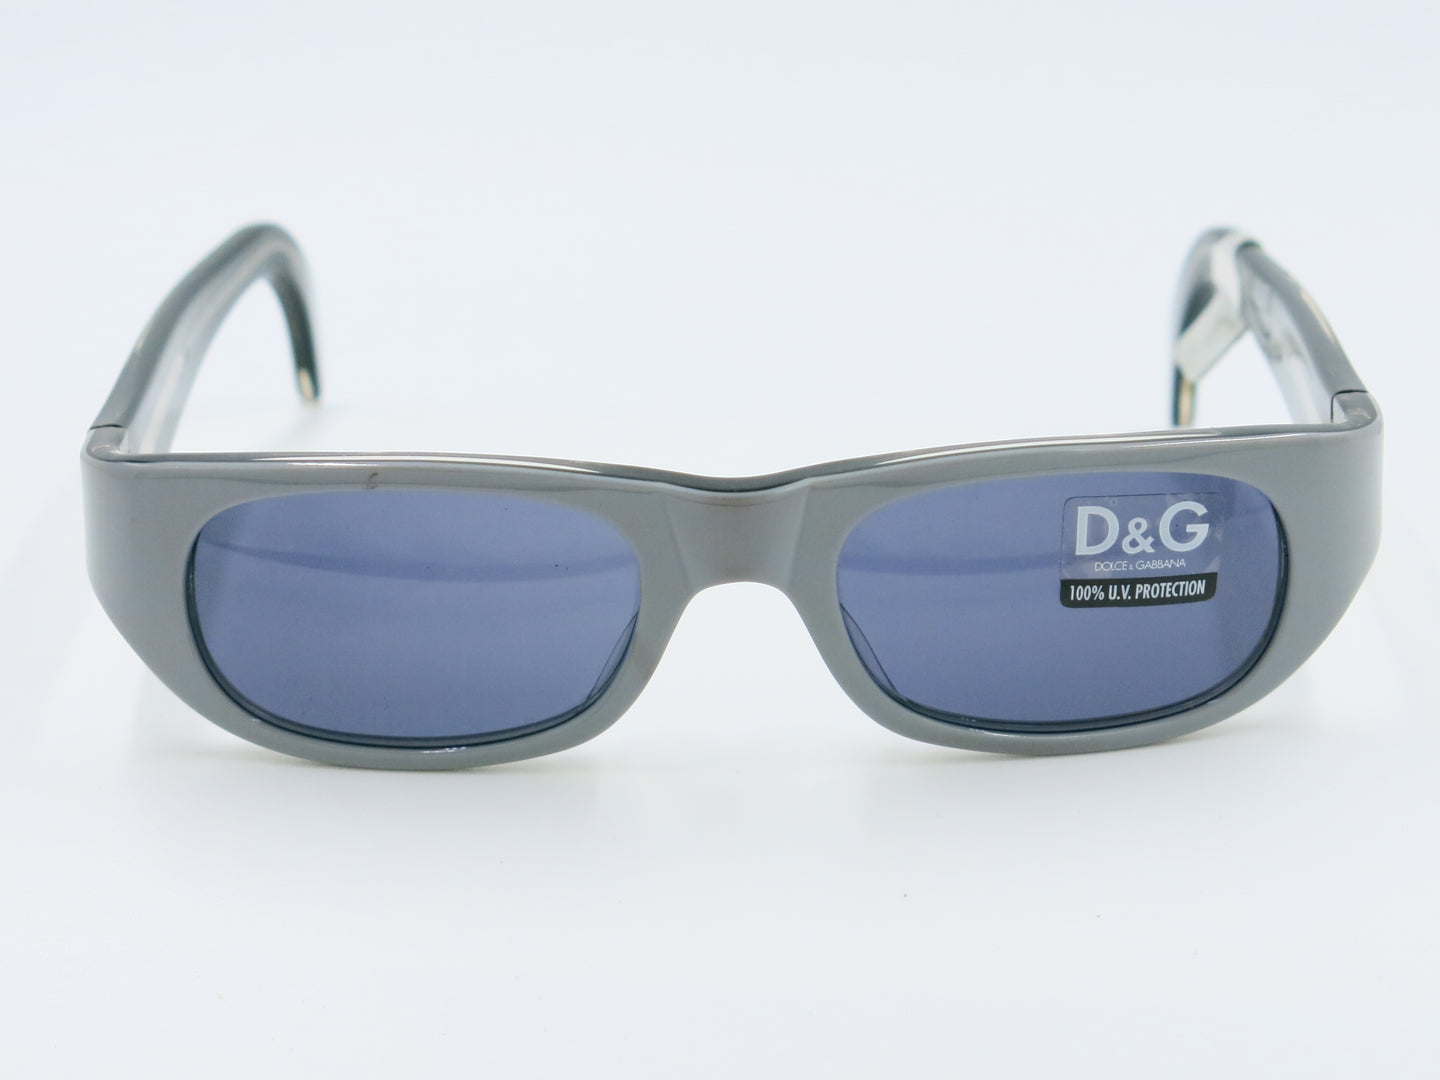 Dolce & Gabbana Sunglasses DG 2003 | Sunglasses by Dolce & Gabbana | Friedman & Sons